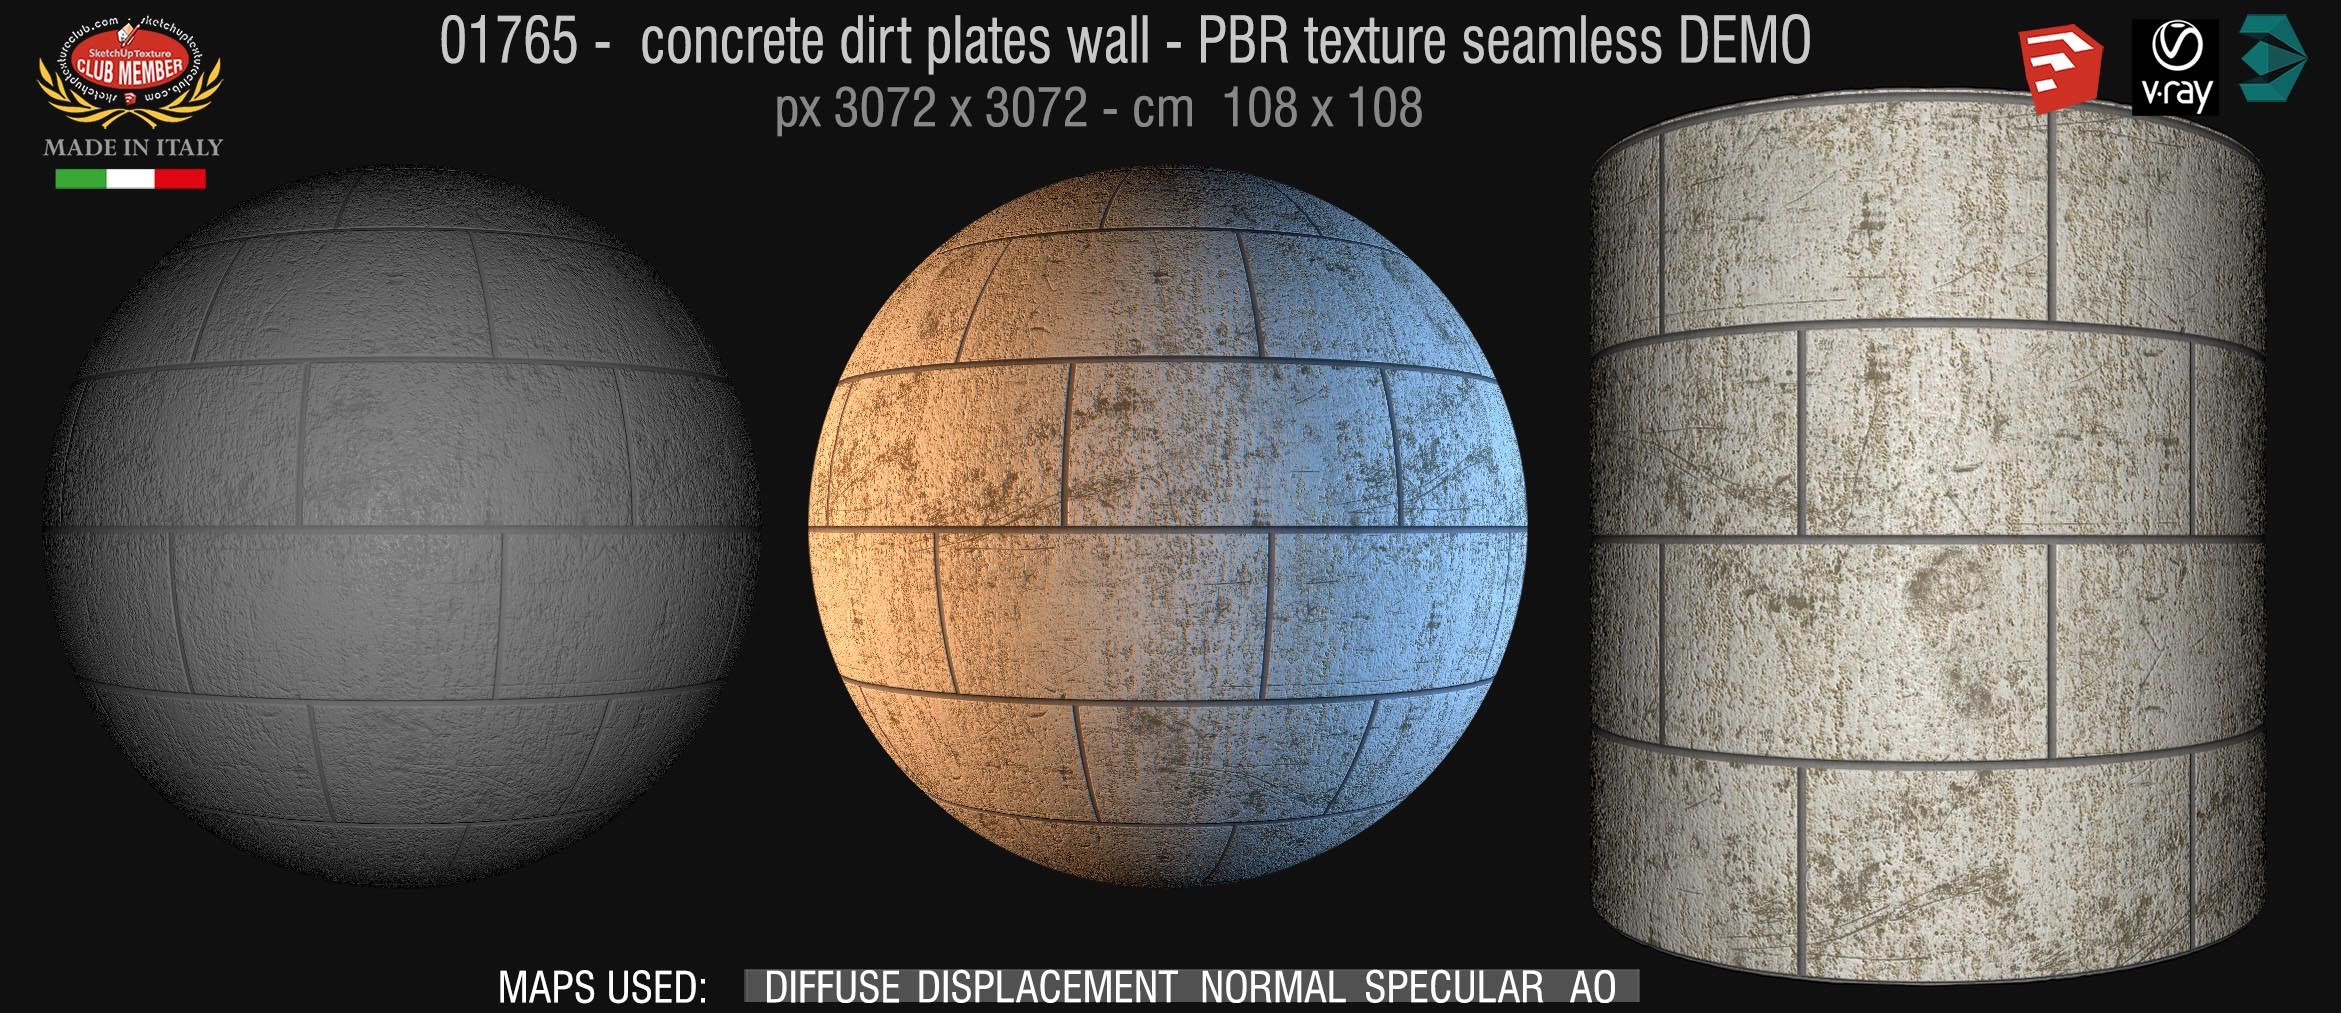 01765 concrete dirt plates wall PBR texture seamless DEMO